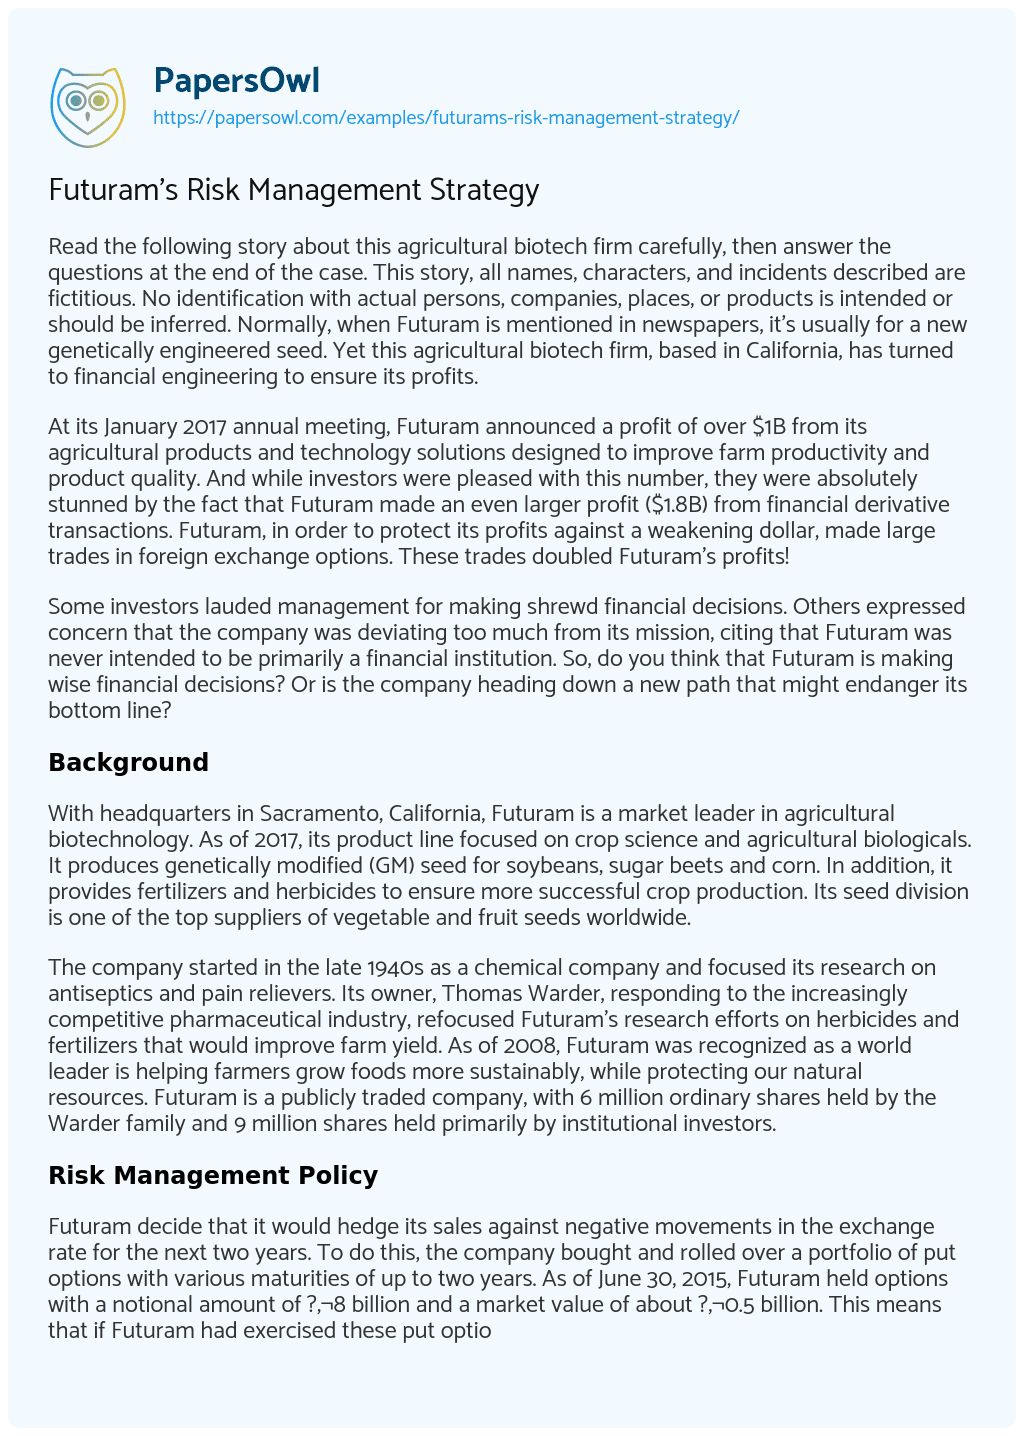 Essay on Futuram’s Risk Management Strategy